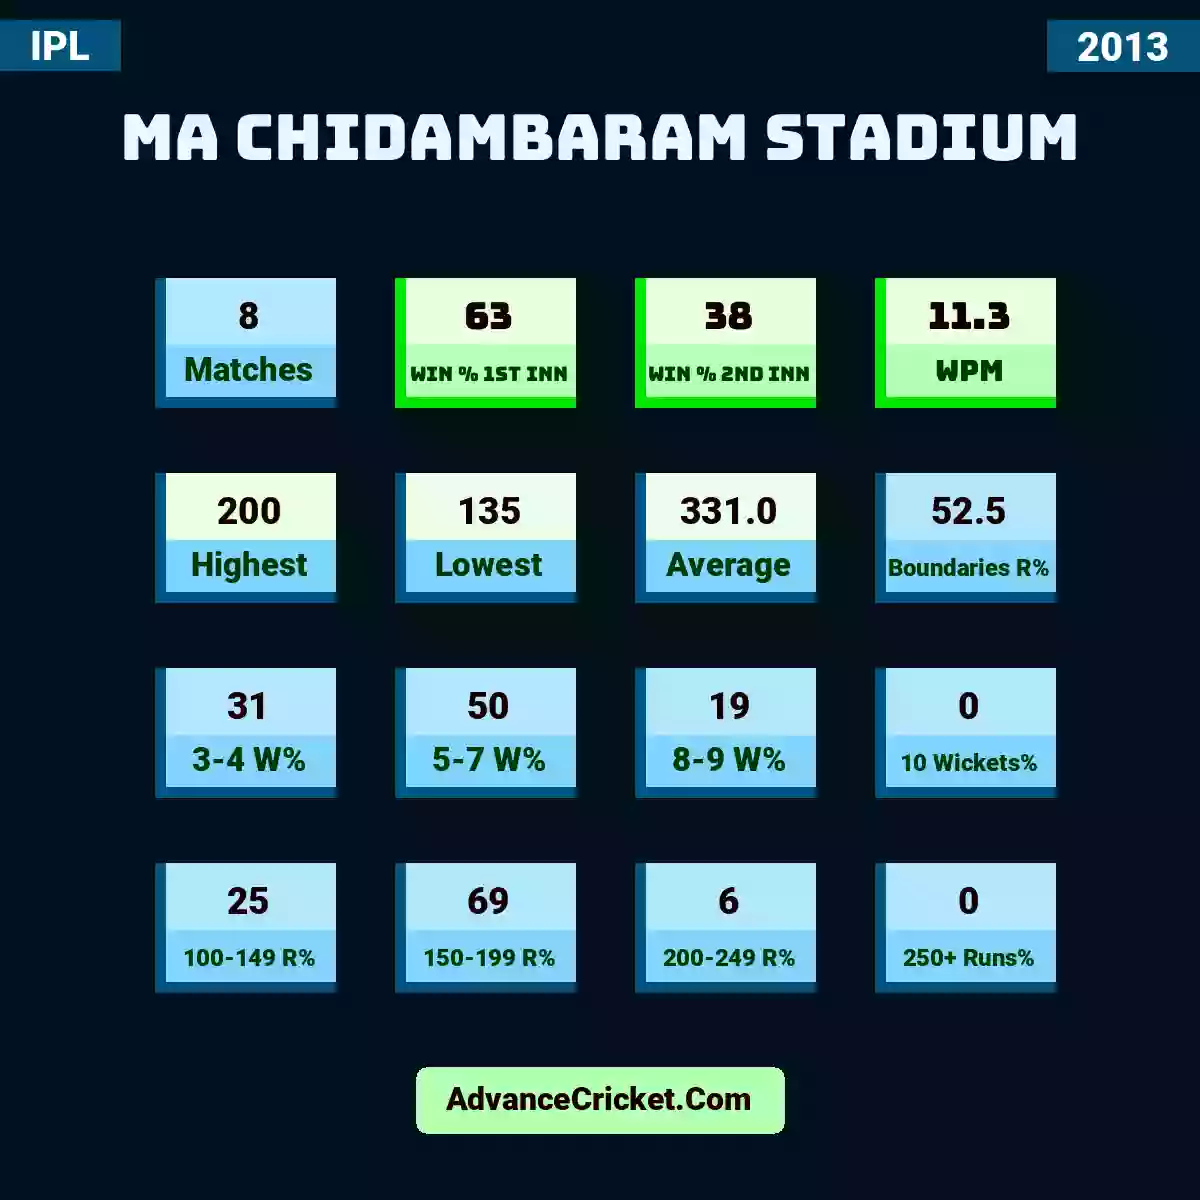 Image showing MA Chidambaram Stadium with Matches: 8, Win % 1st Inn: 63, Win % 2nd Inn: 38, WPM: 11.3, Highest: 200, Lowest: 135, Average: 331.0, Boundaries R%: 52.5, 3-4 W%: 31, 5-7 W%: 50, 8-9 W%: 19, 10 Wickets%: 0, 100-149 R%: 25, 150-199 R%: 69, 200-249 R%: 6, 250+ Runs%: 0.